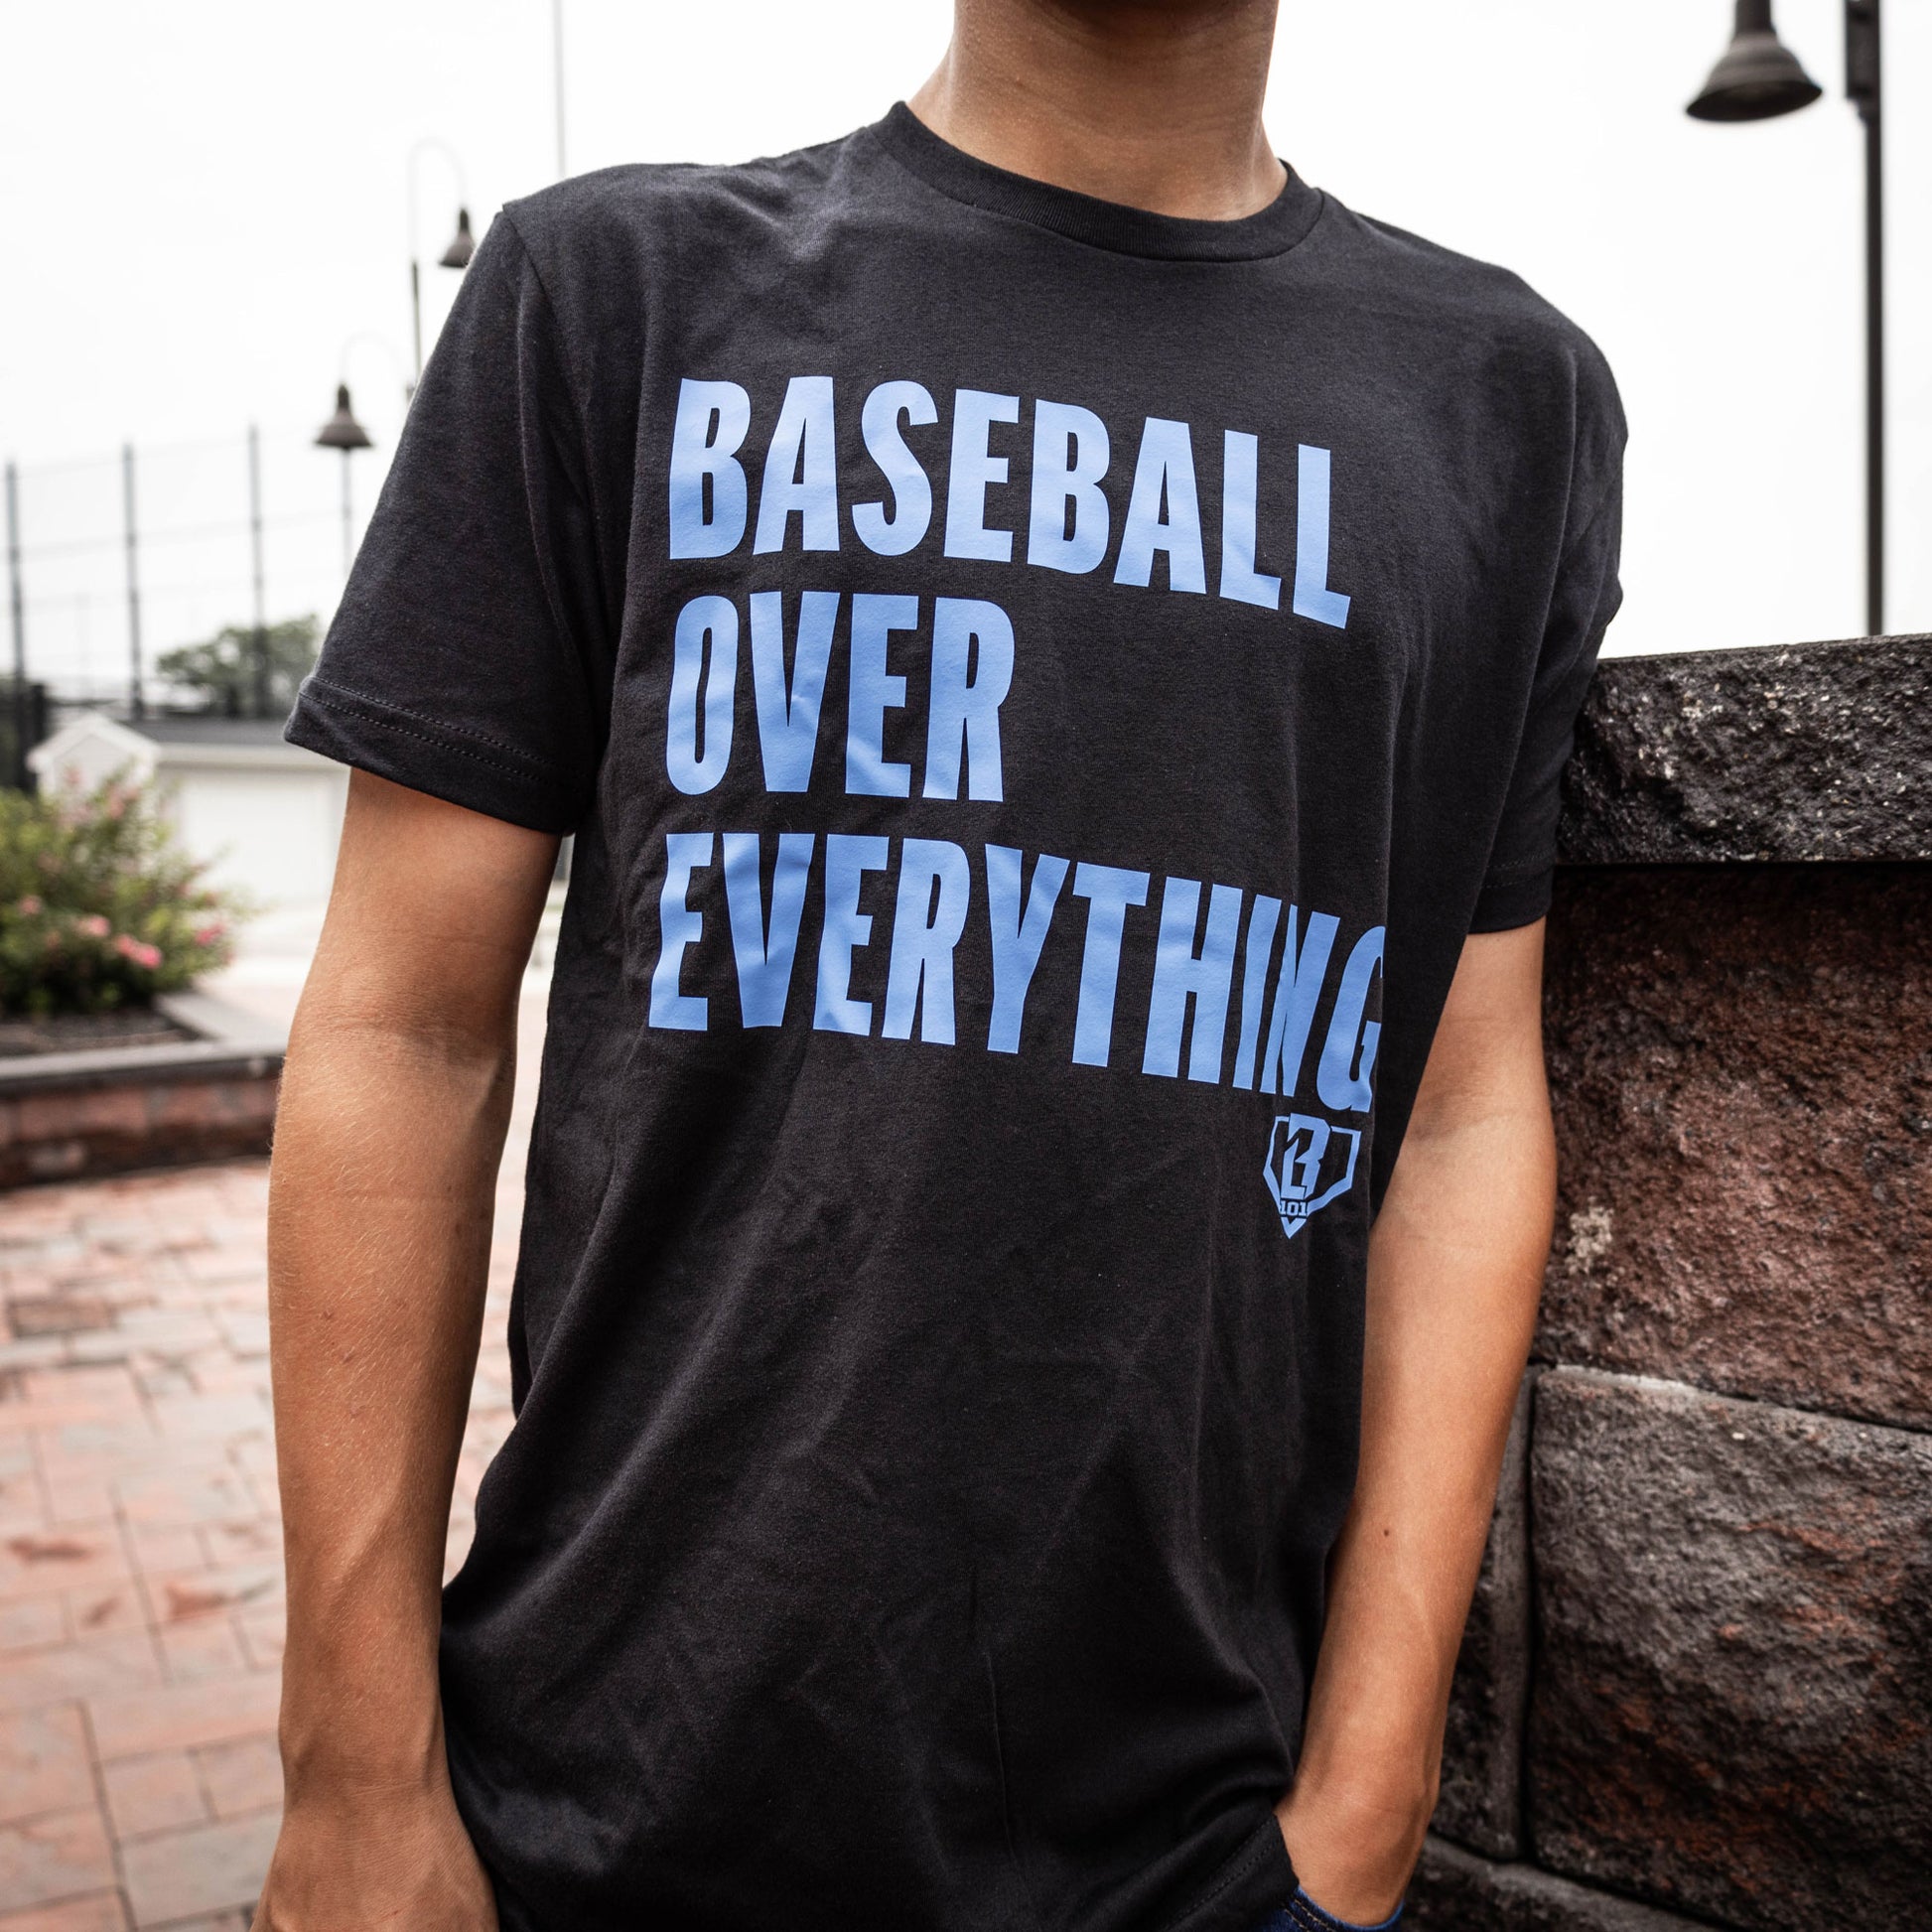 Baseball Over Everything Youth Tee - Black/Blue